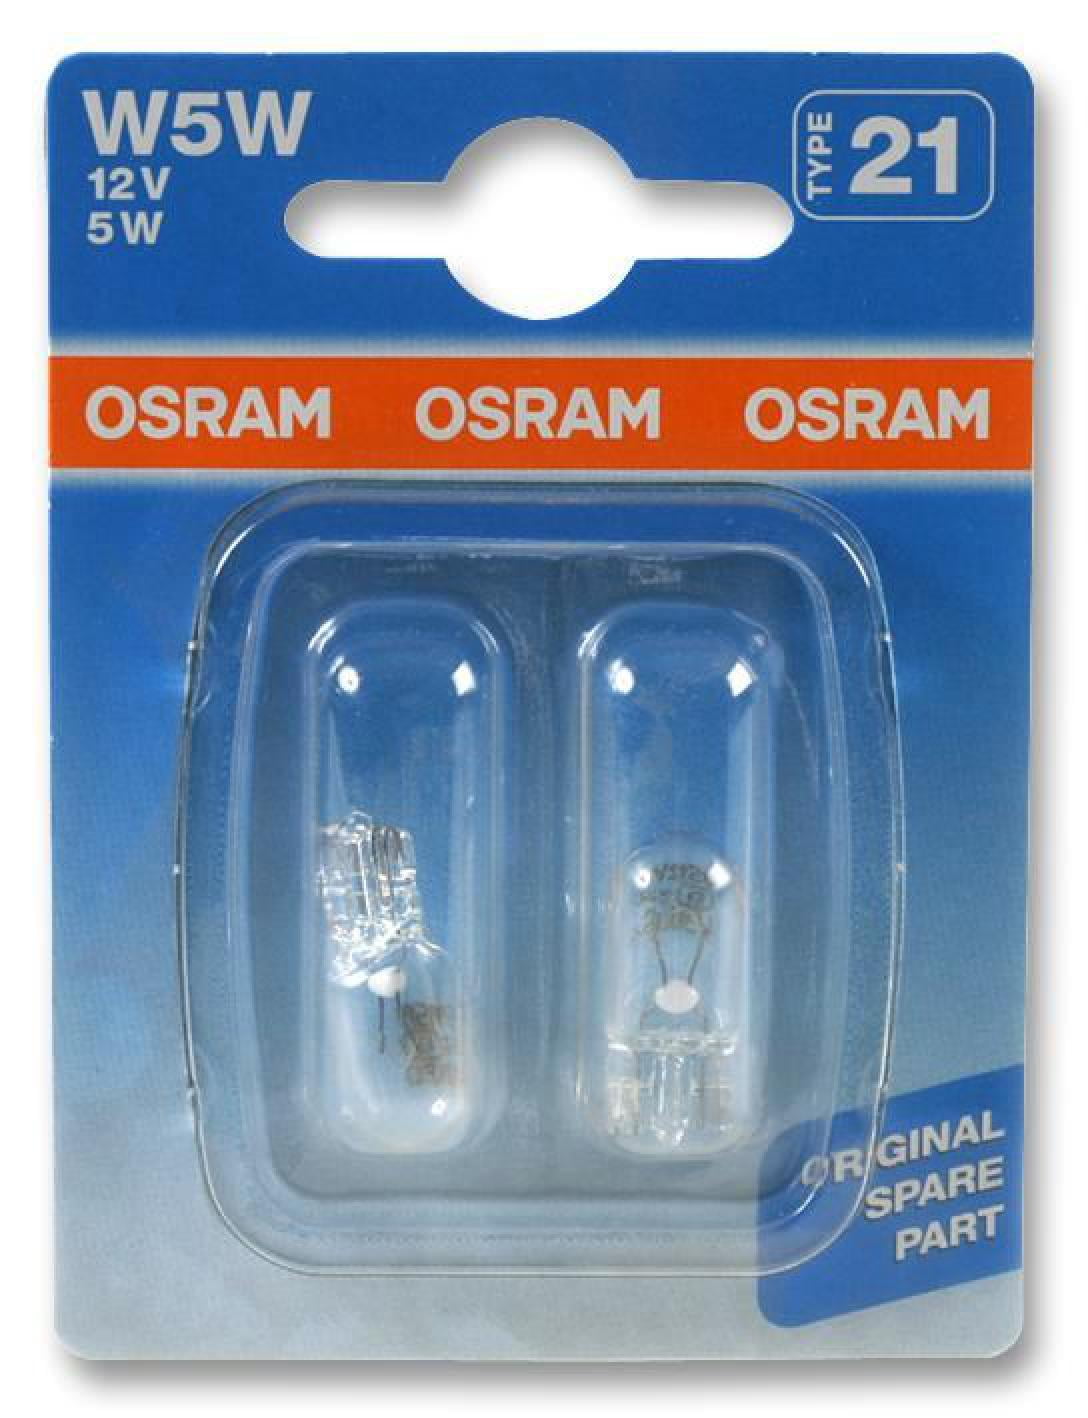 OSRAM - 12V 5W W5W W2x9.5d Car Side / Tail Light Bulb (Twin Pack) 